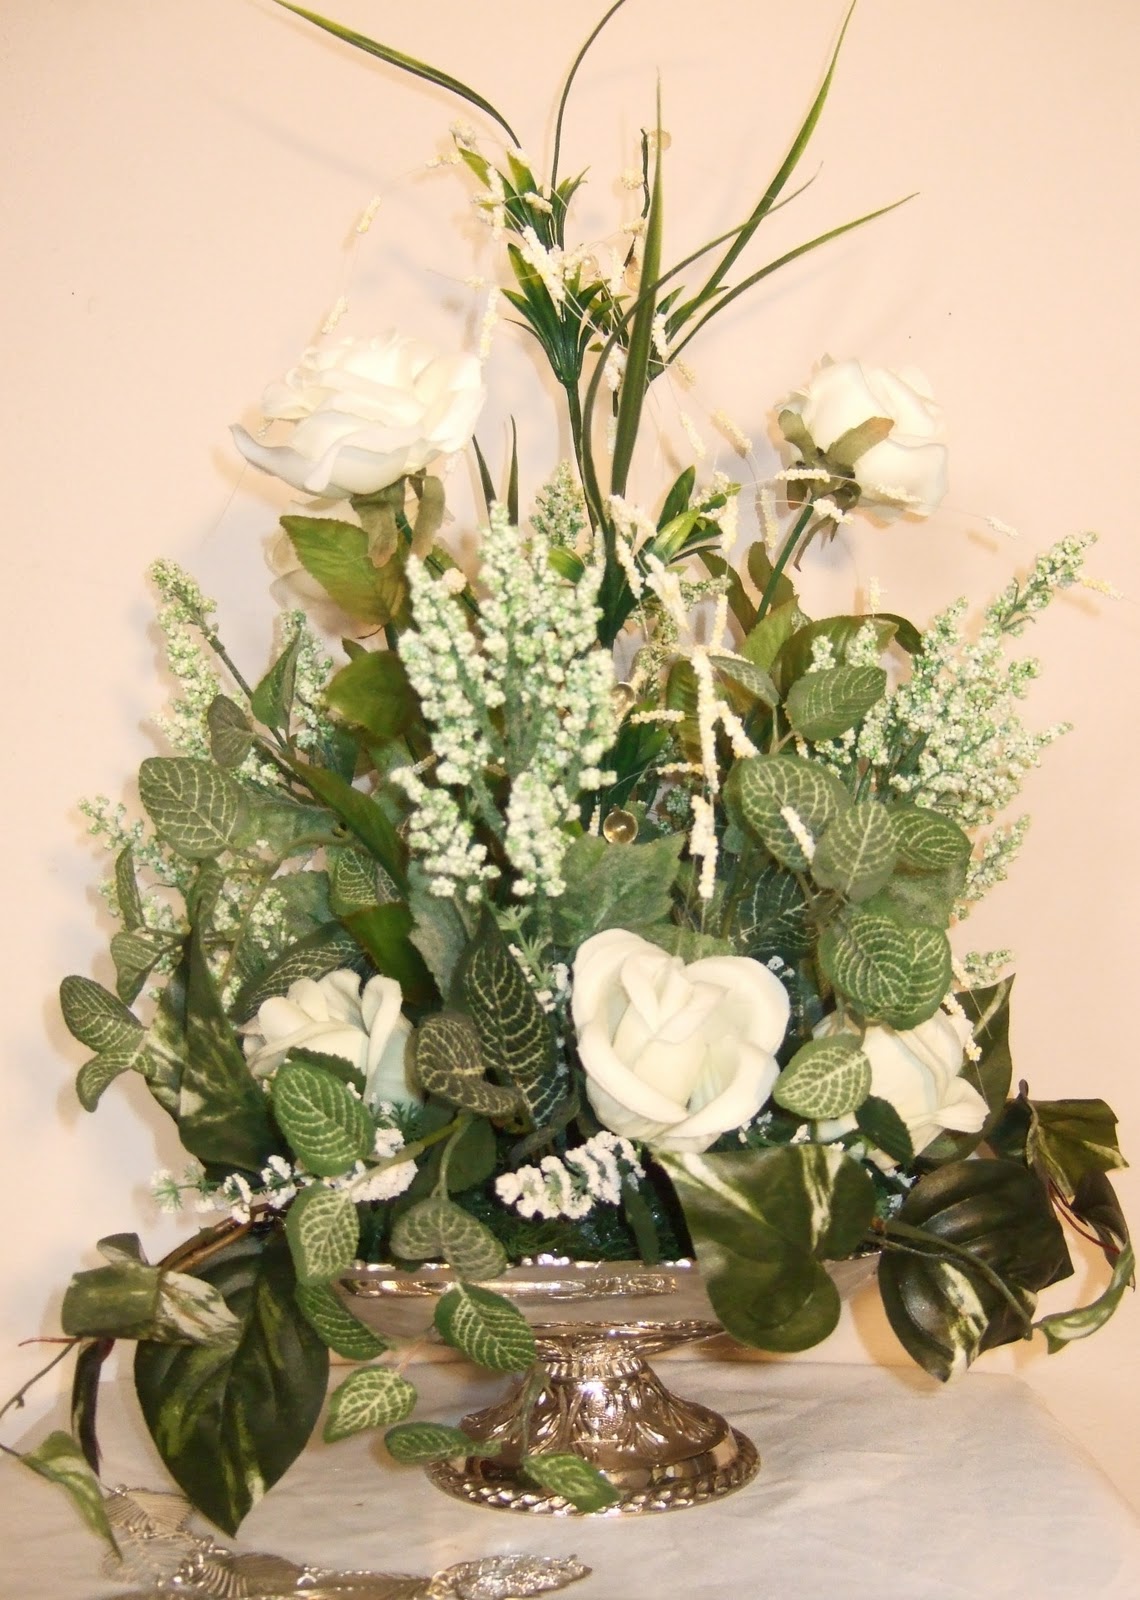 Anasilkflowers Pictures Silk Flowers White Arrangements And Wedding Decoration Ideas